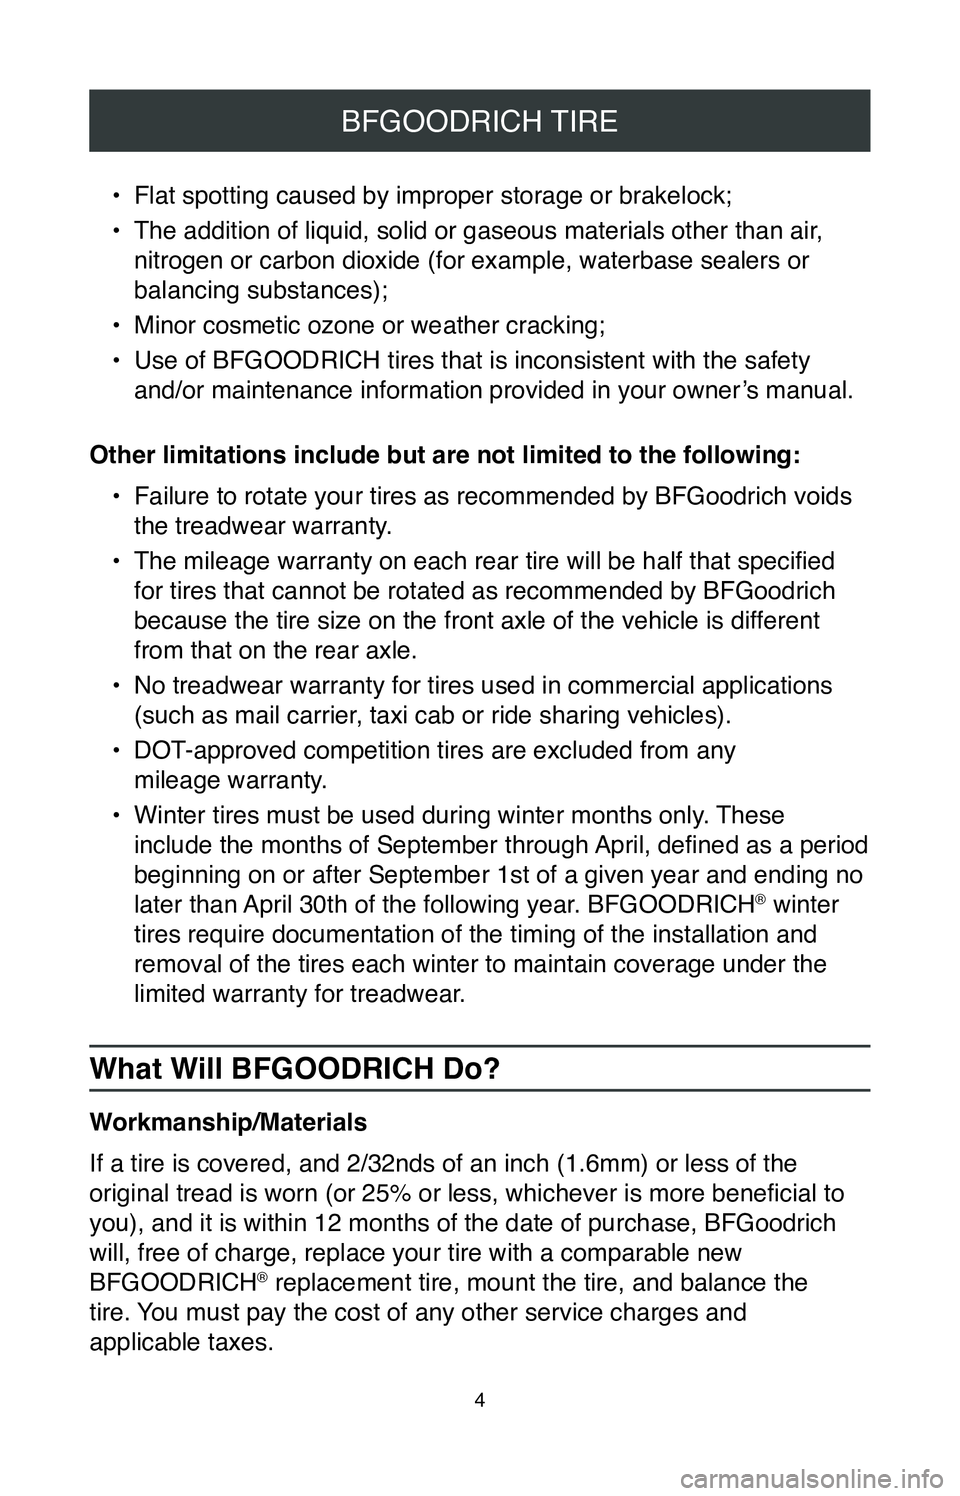 TOYOTA AVALON HYBRID 2020  Warranties & Maintenance Guides (in English) 4
BFGOODRICH TIRE
